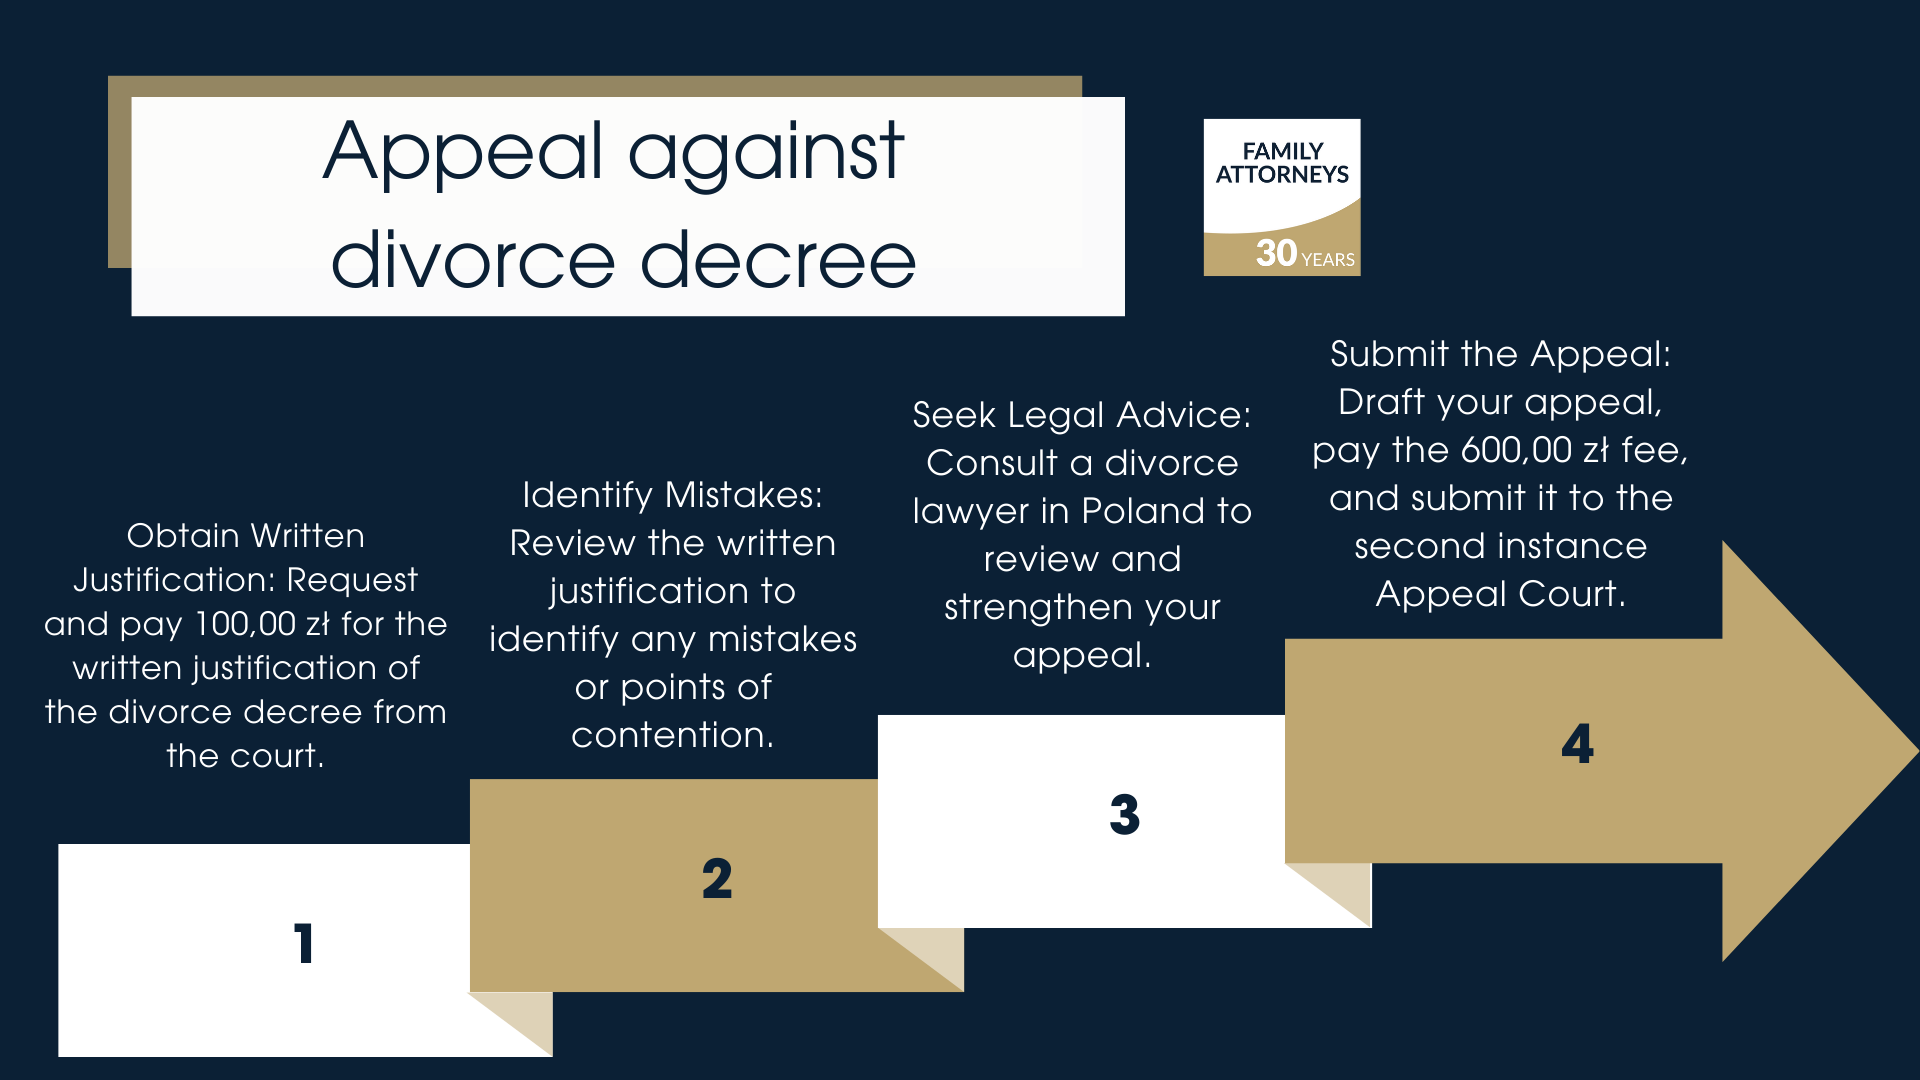 Appeal against divorce decree